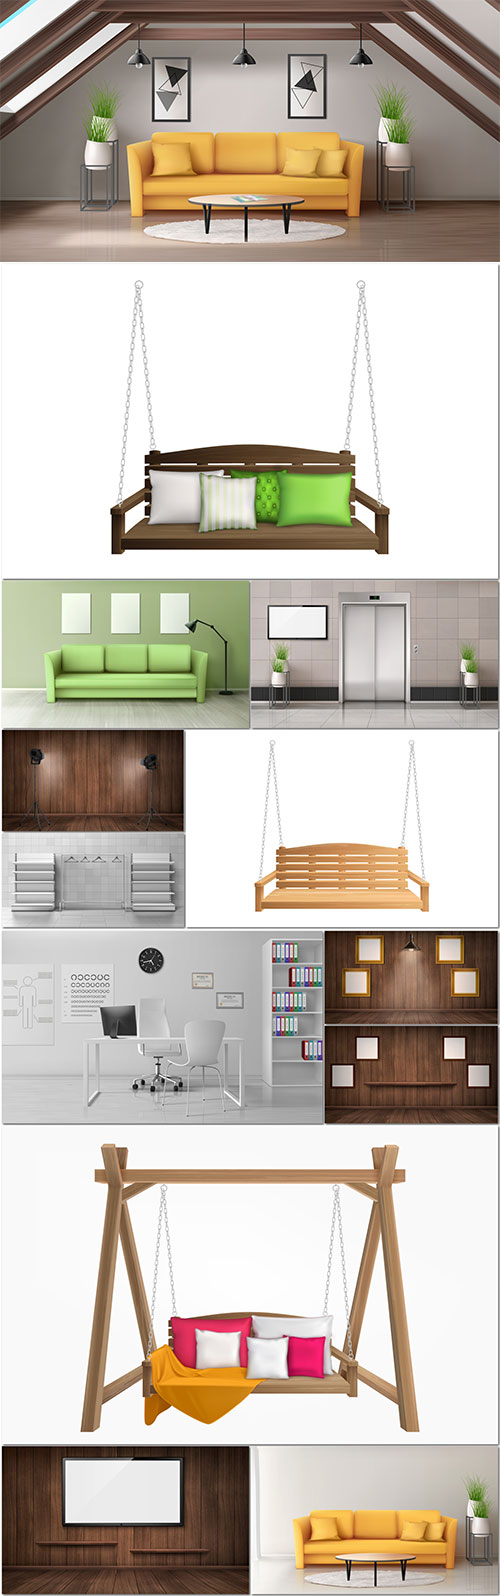 Interior in vector, furniture